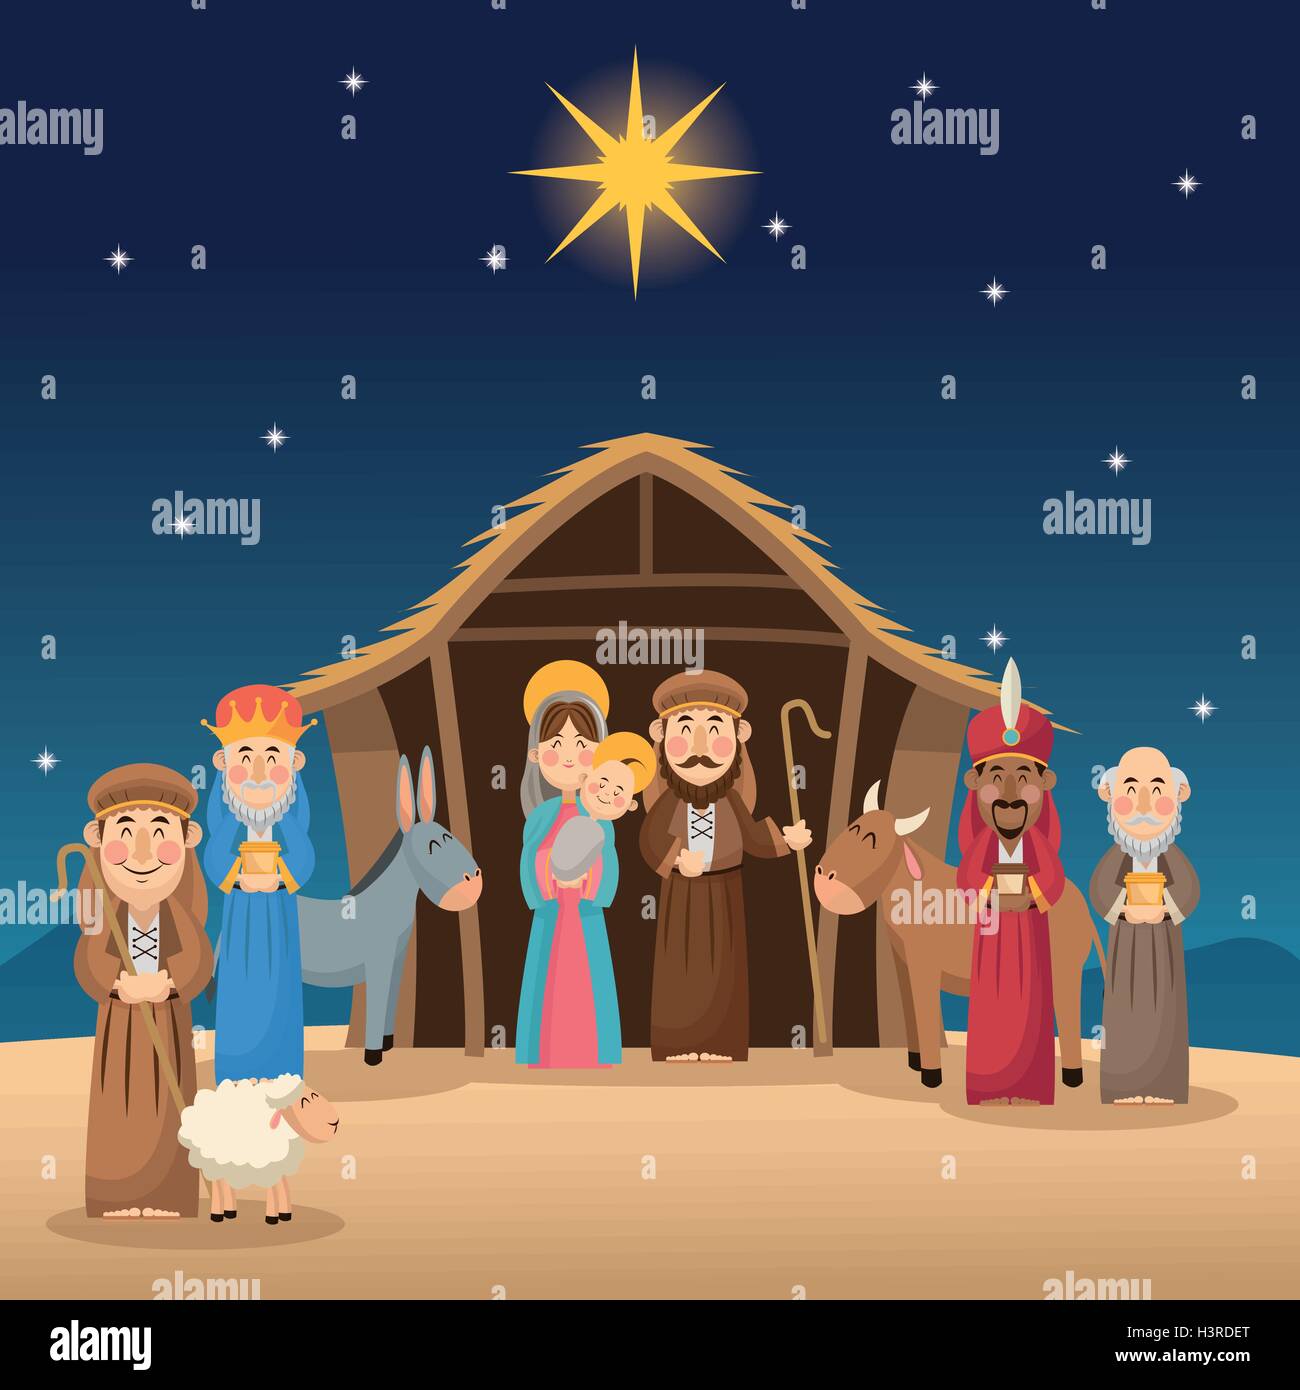 Mary joseph jesus wise men and shepherd design Stock Image